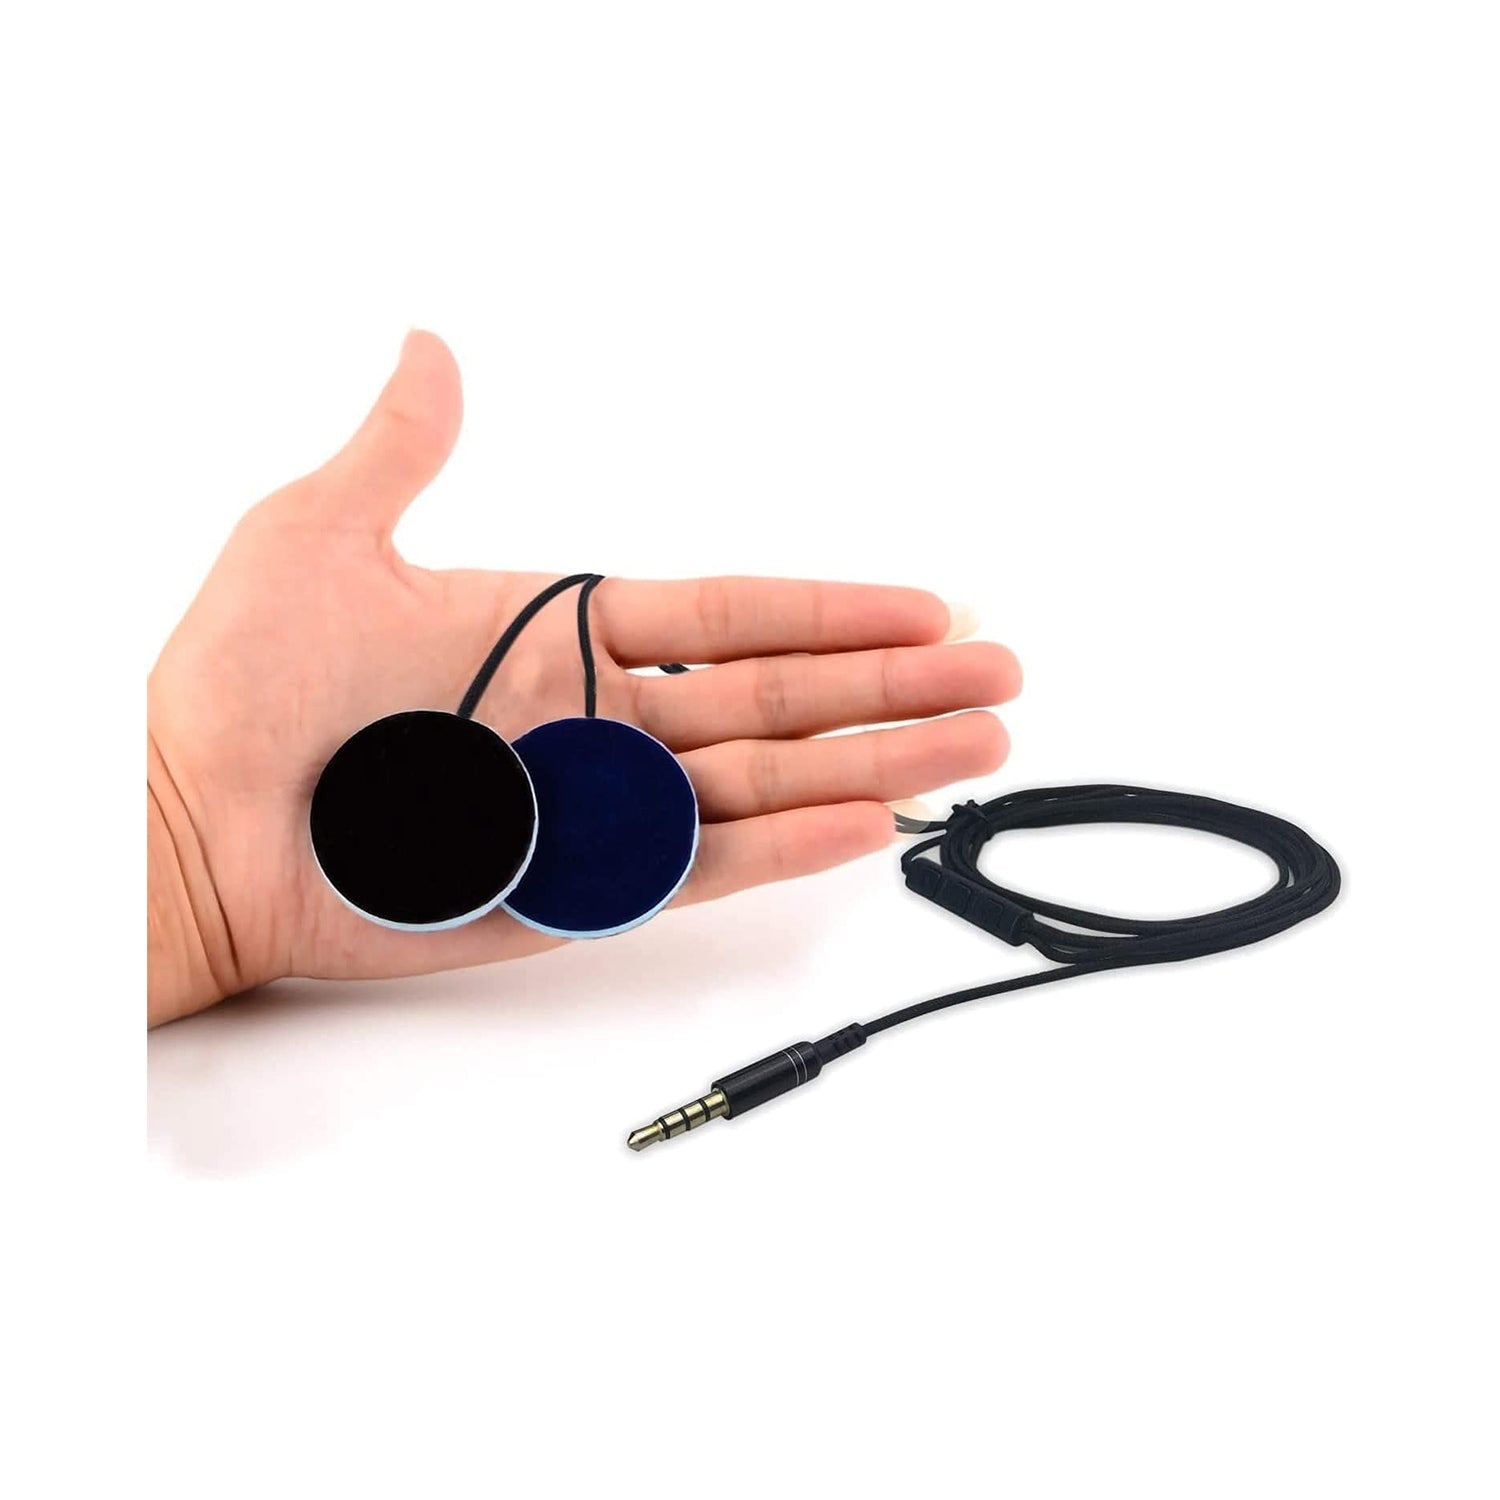 Contixo H1 Adjustable Fleece Headband Headphones